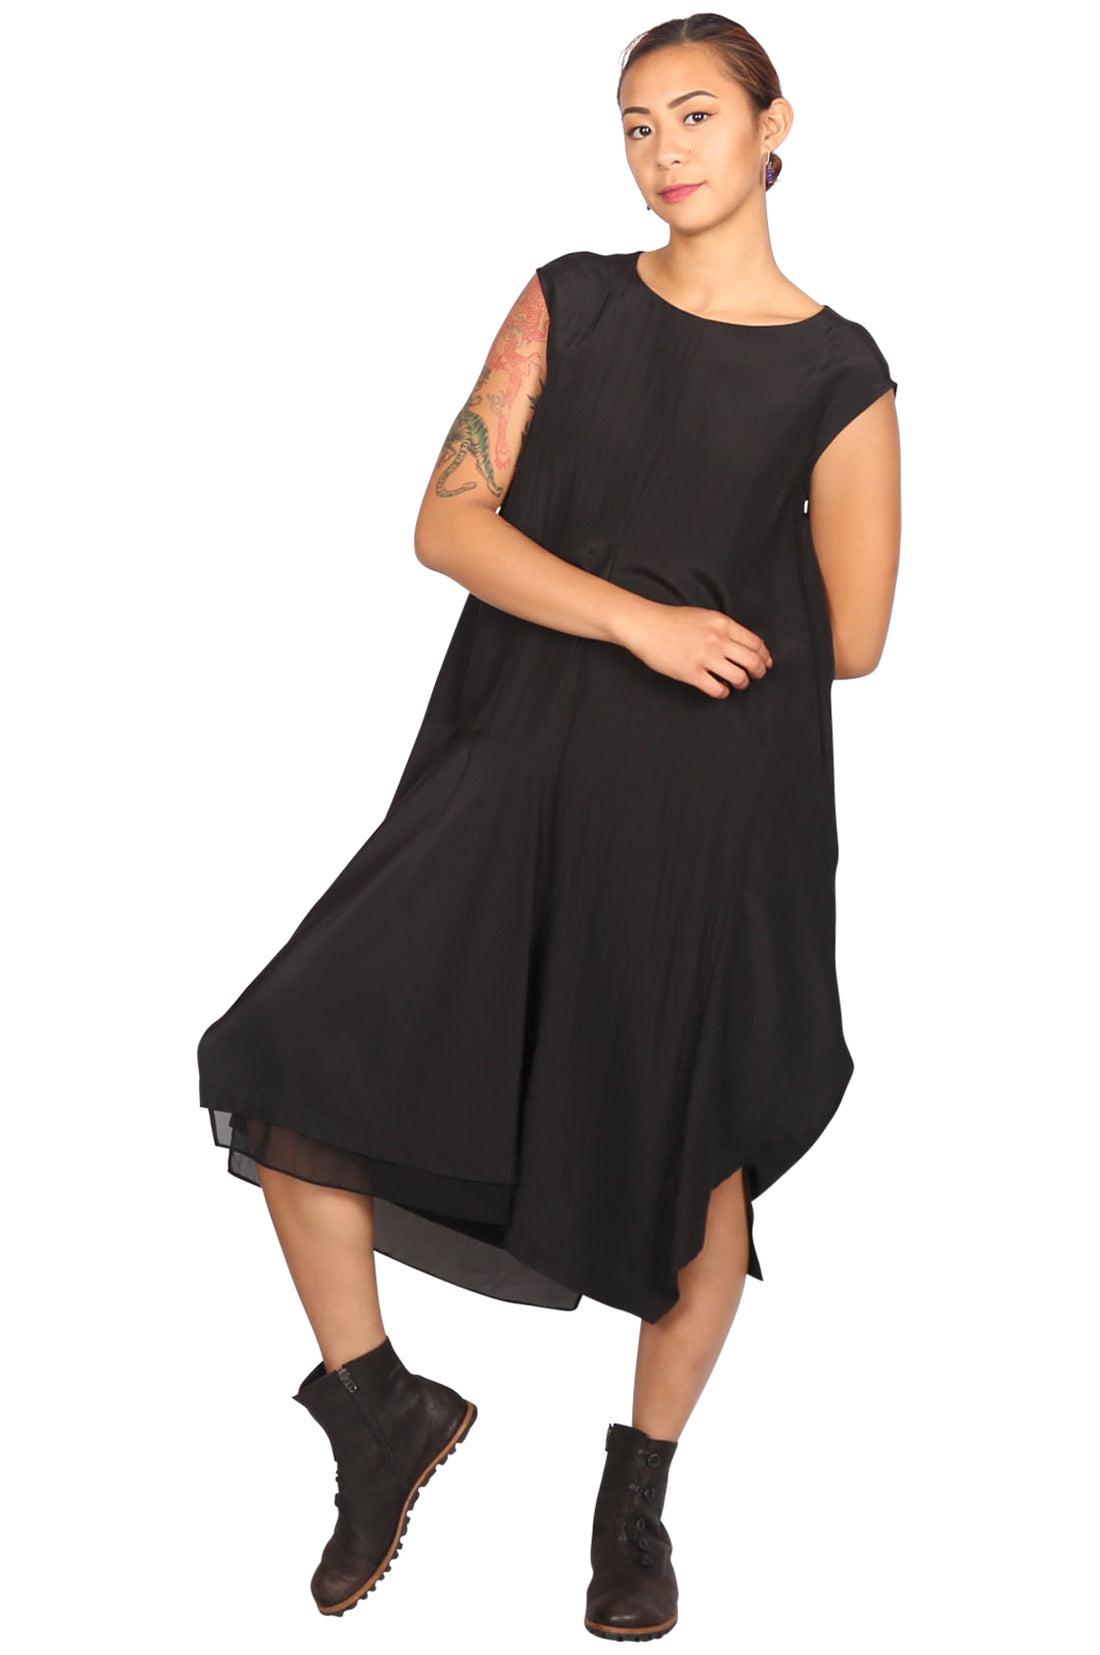 Moyuru Black Dress with Contrast Hem